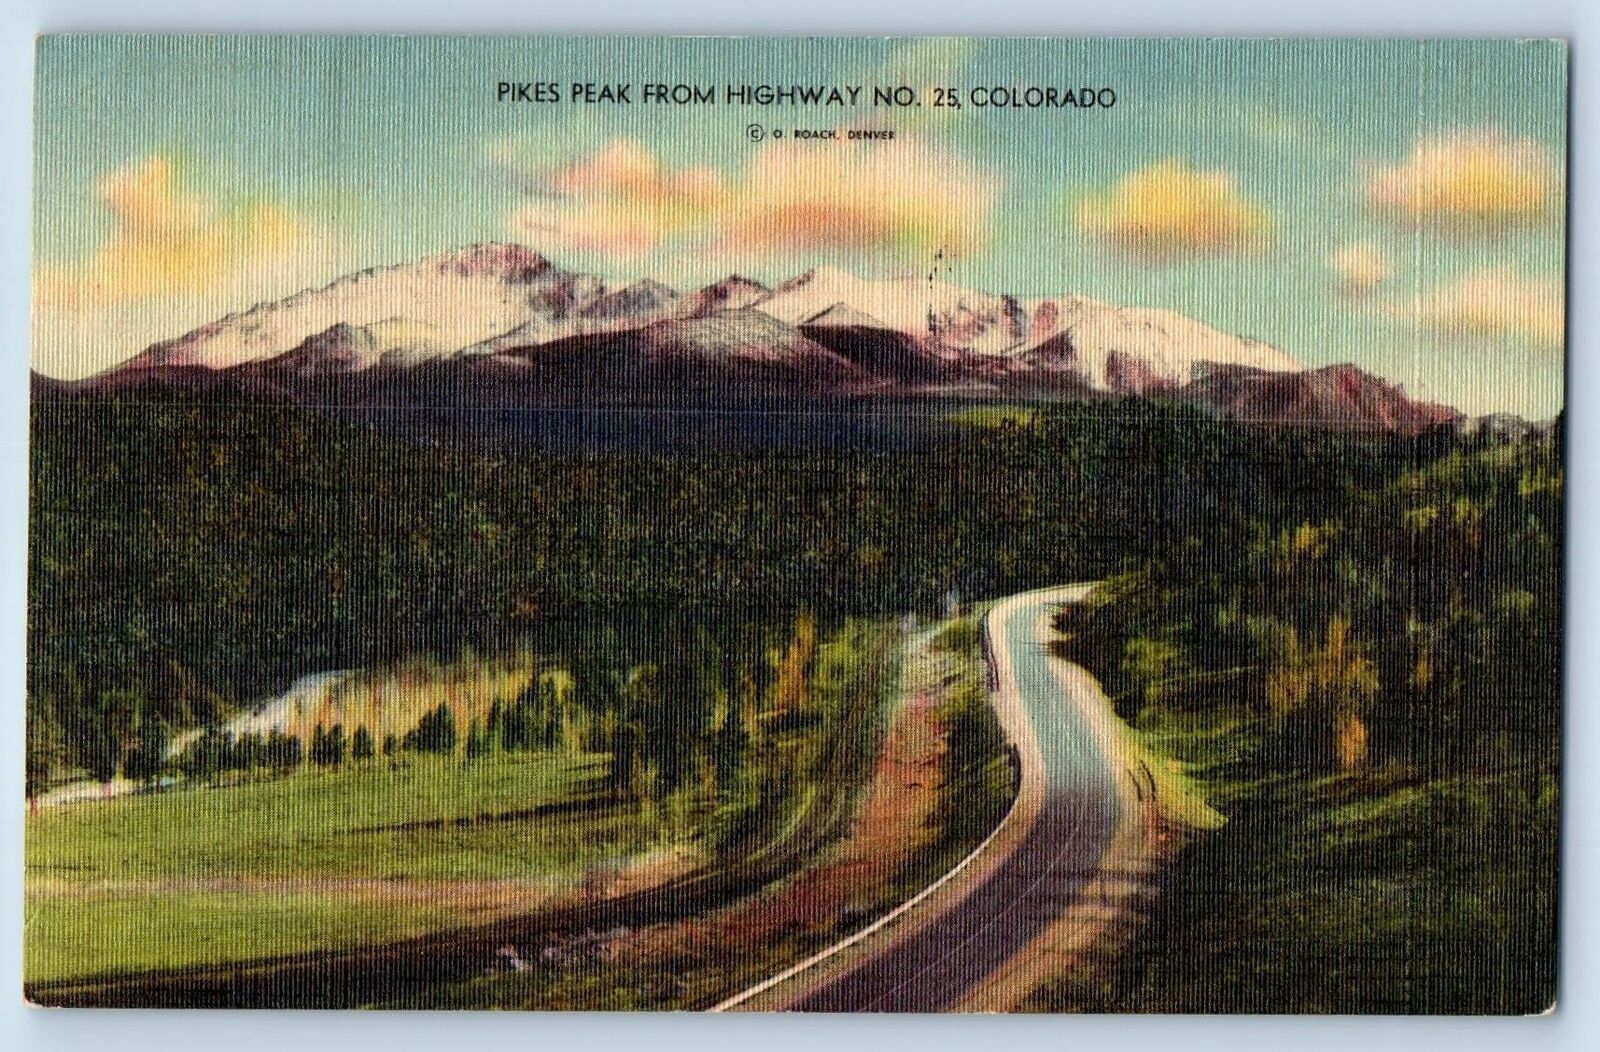 1945 Pikes Peak Mountain Snowcapped Grove Road Highway No. 25 Colorado Postcard